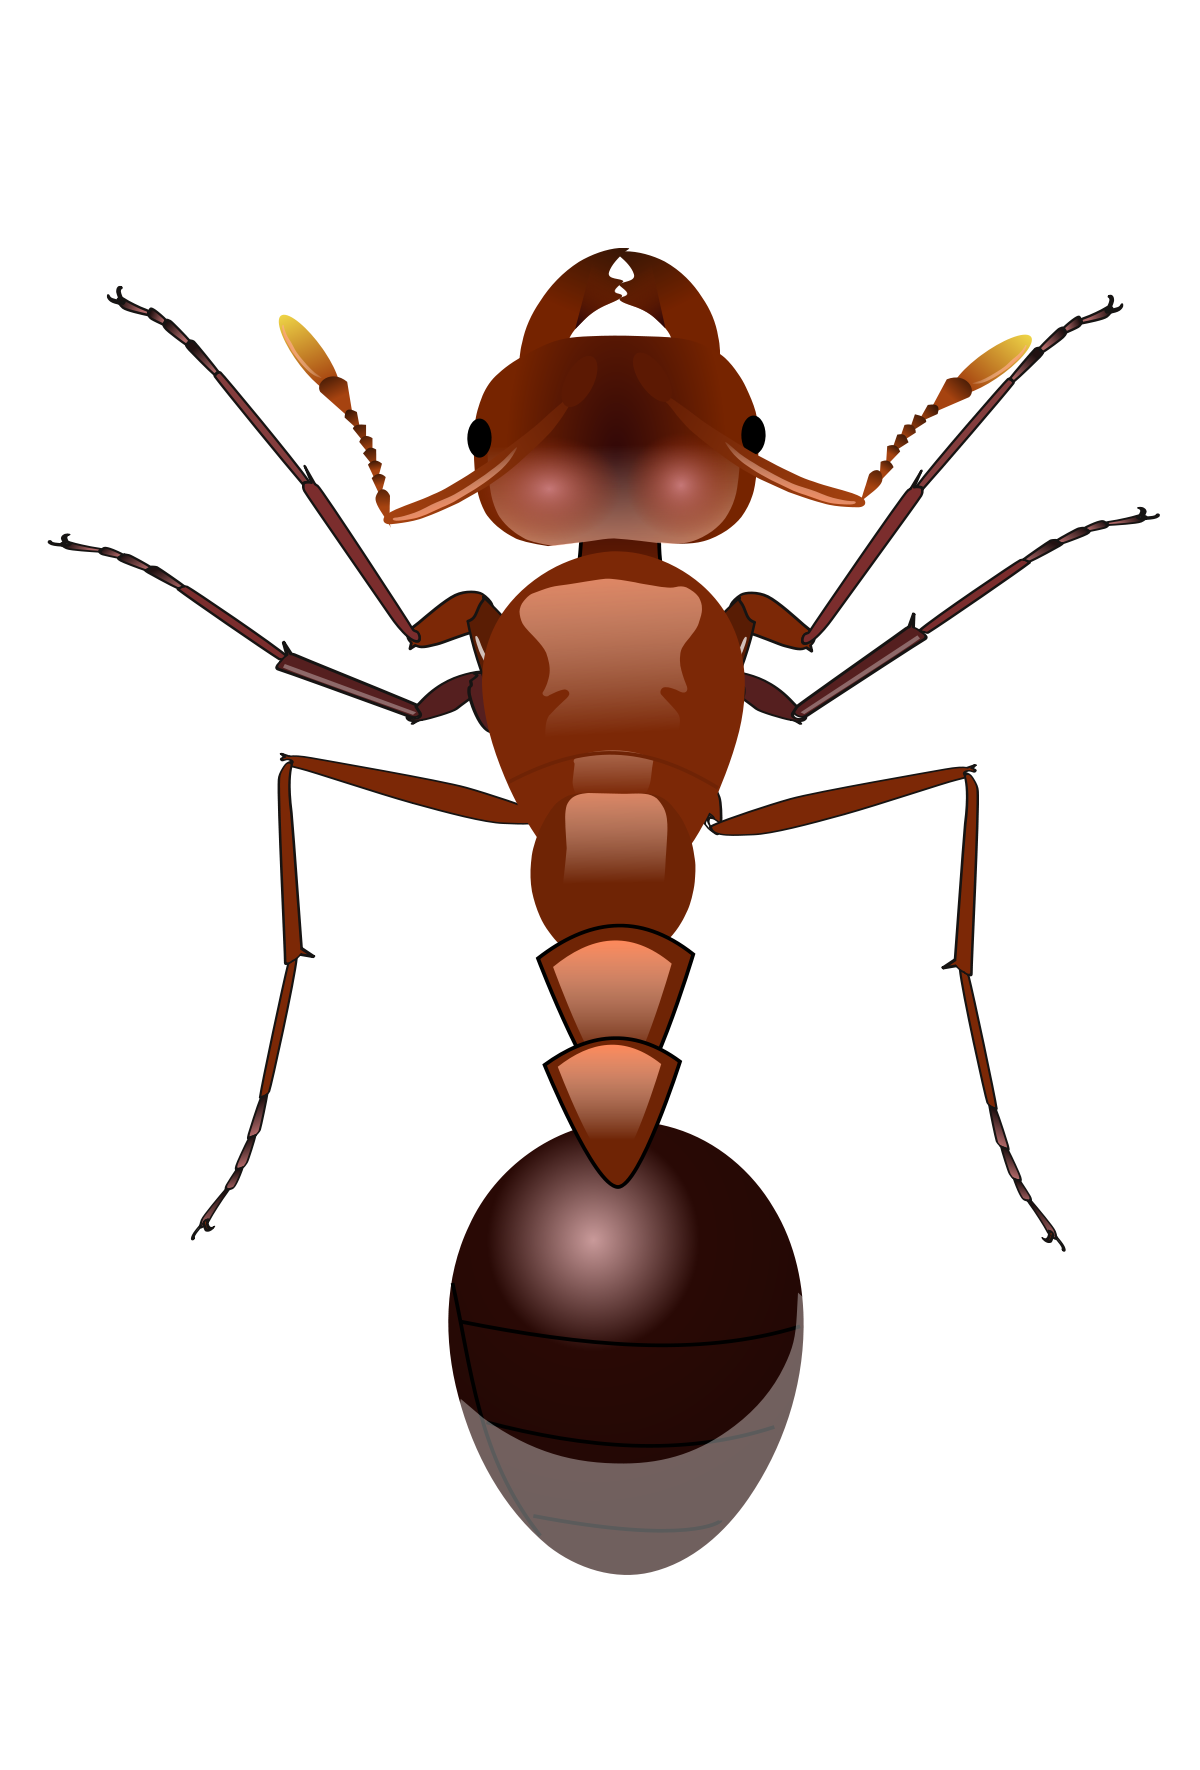 Foto di PNG della formica rossa